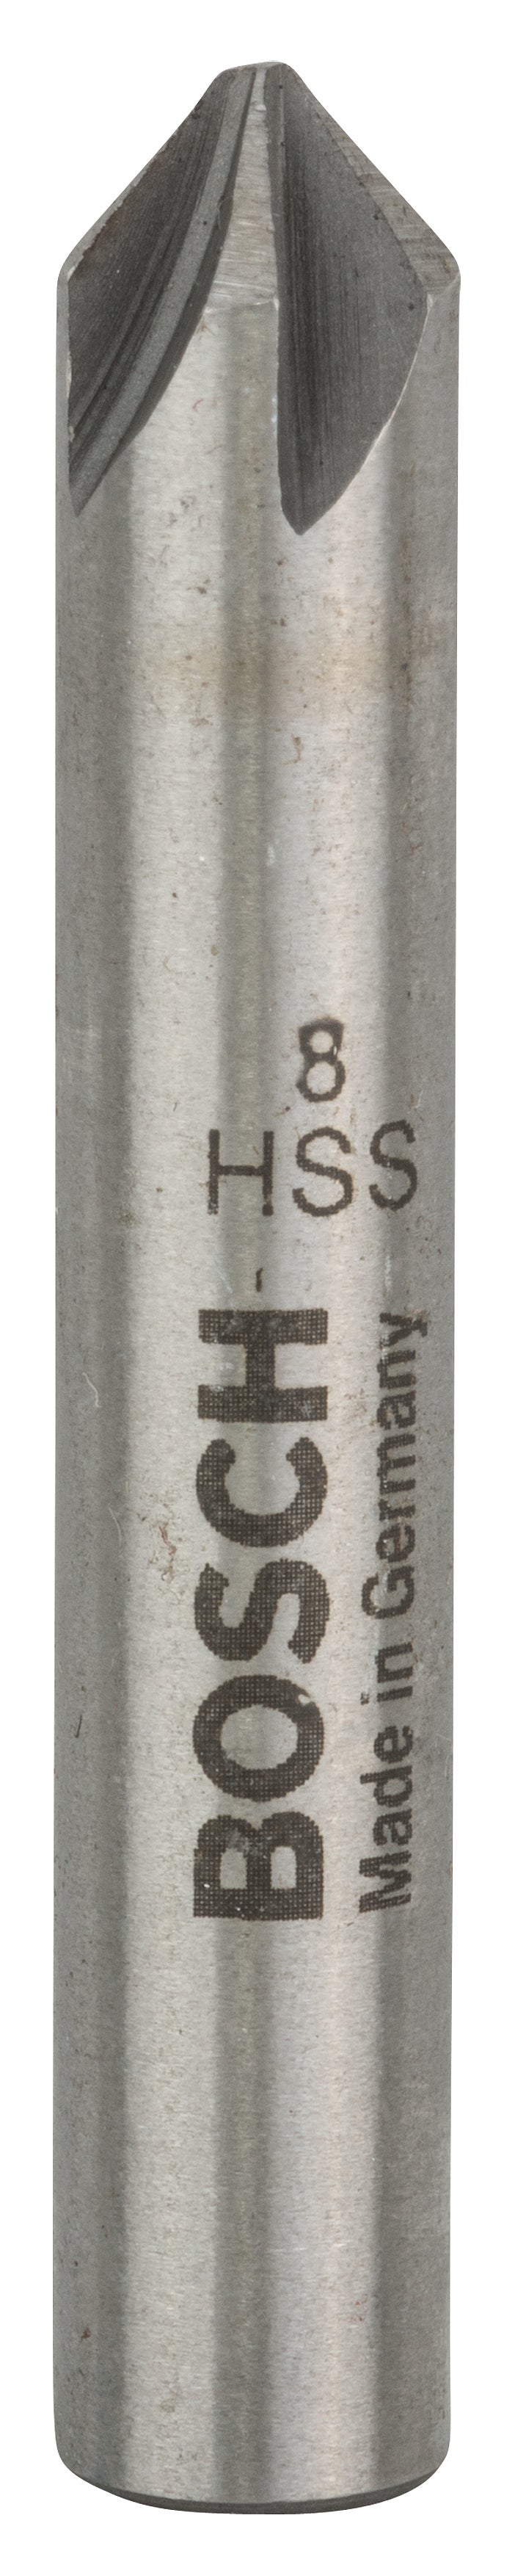 Bosch Professional Countersink Bits - 8, M3, 48, 6mm